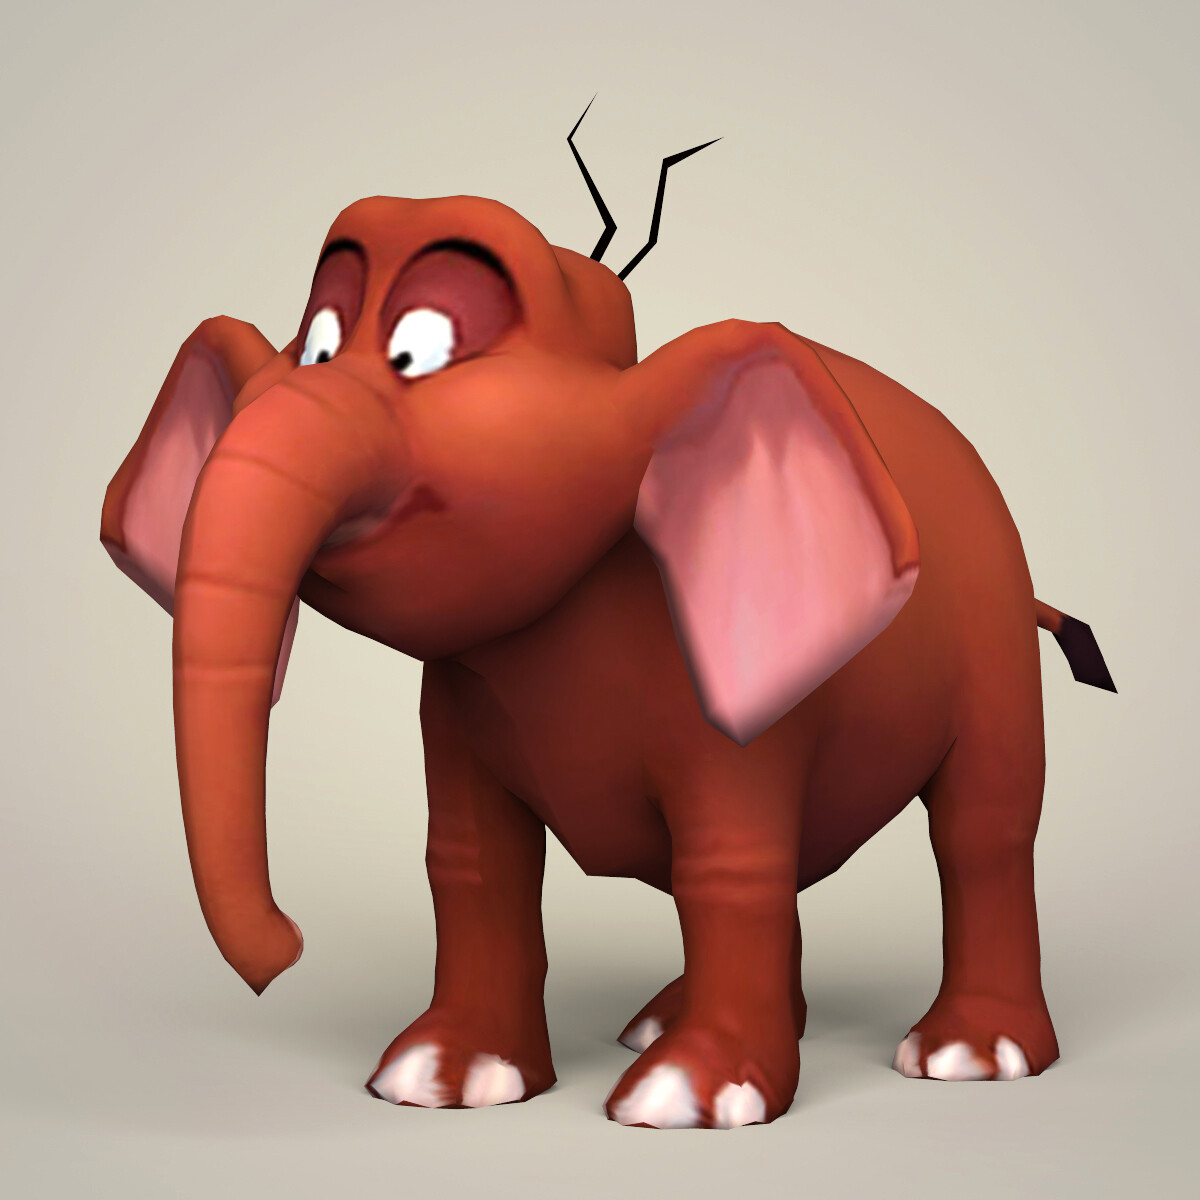 ArtStation - Cartoon Elephant | Game Assets